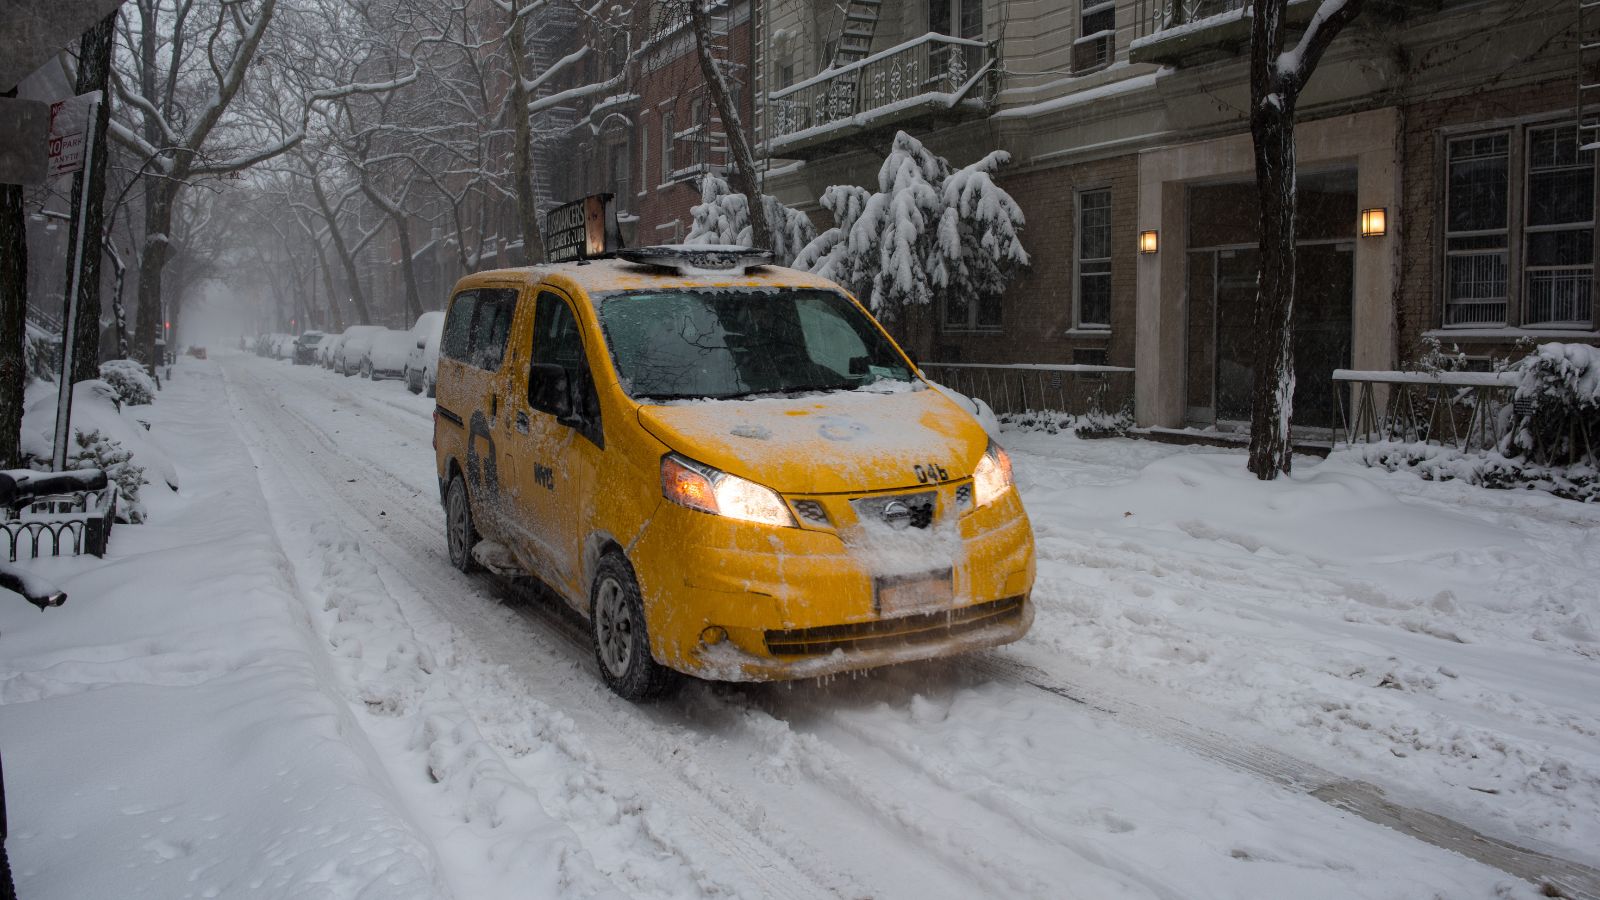 Yellow cab driving through snowy New York street.